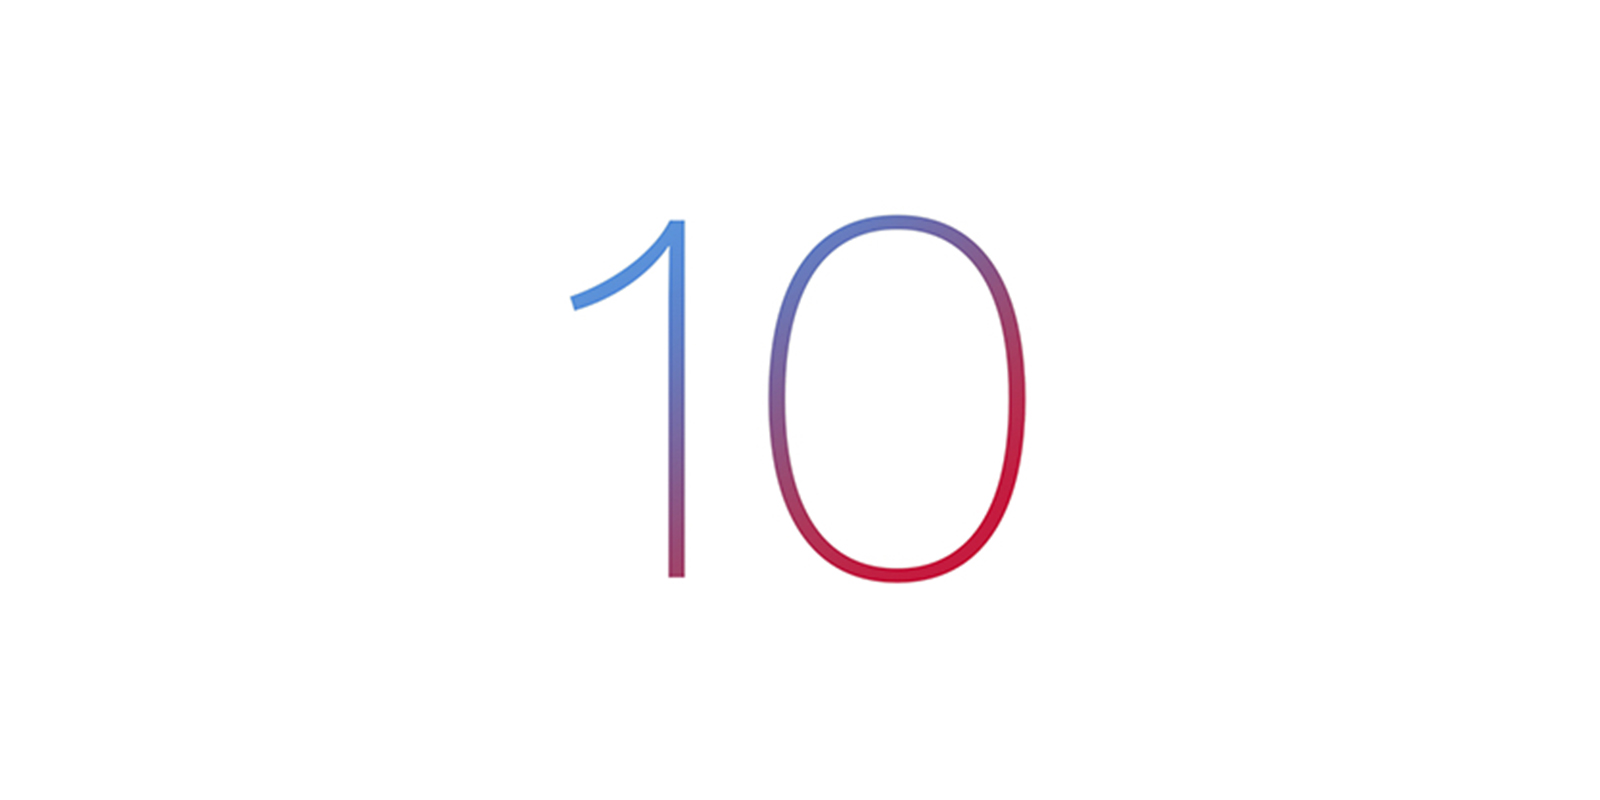 iOS 10 logo